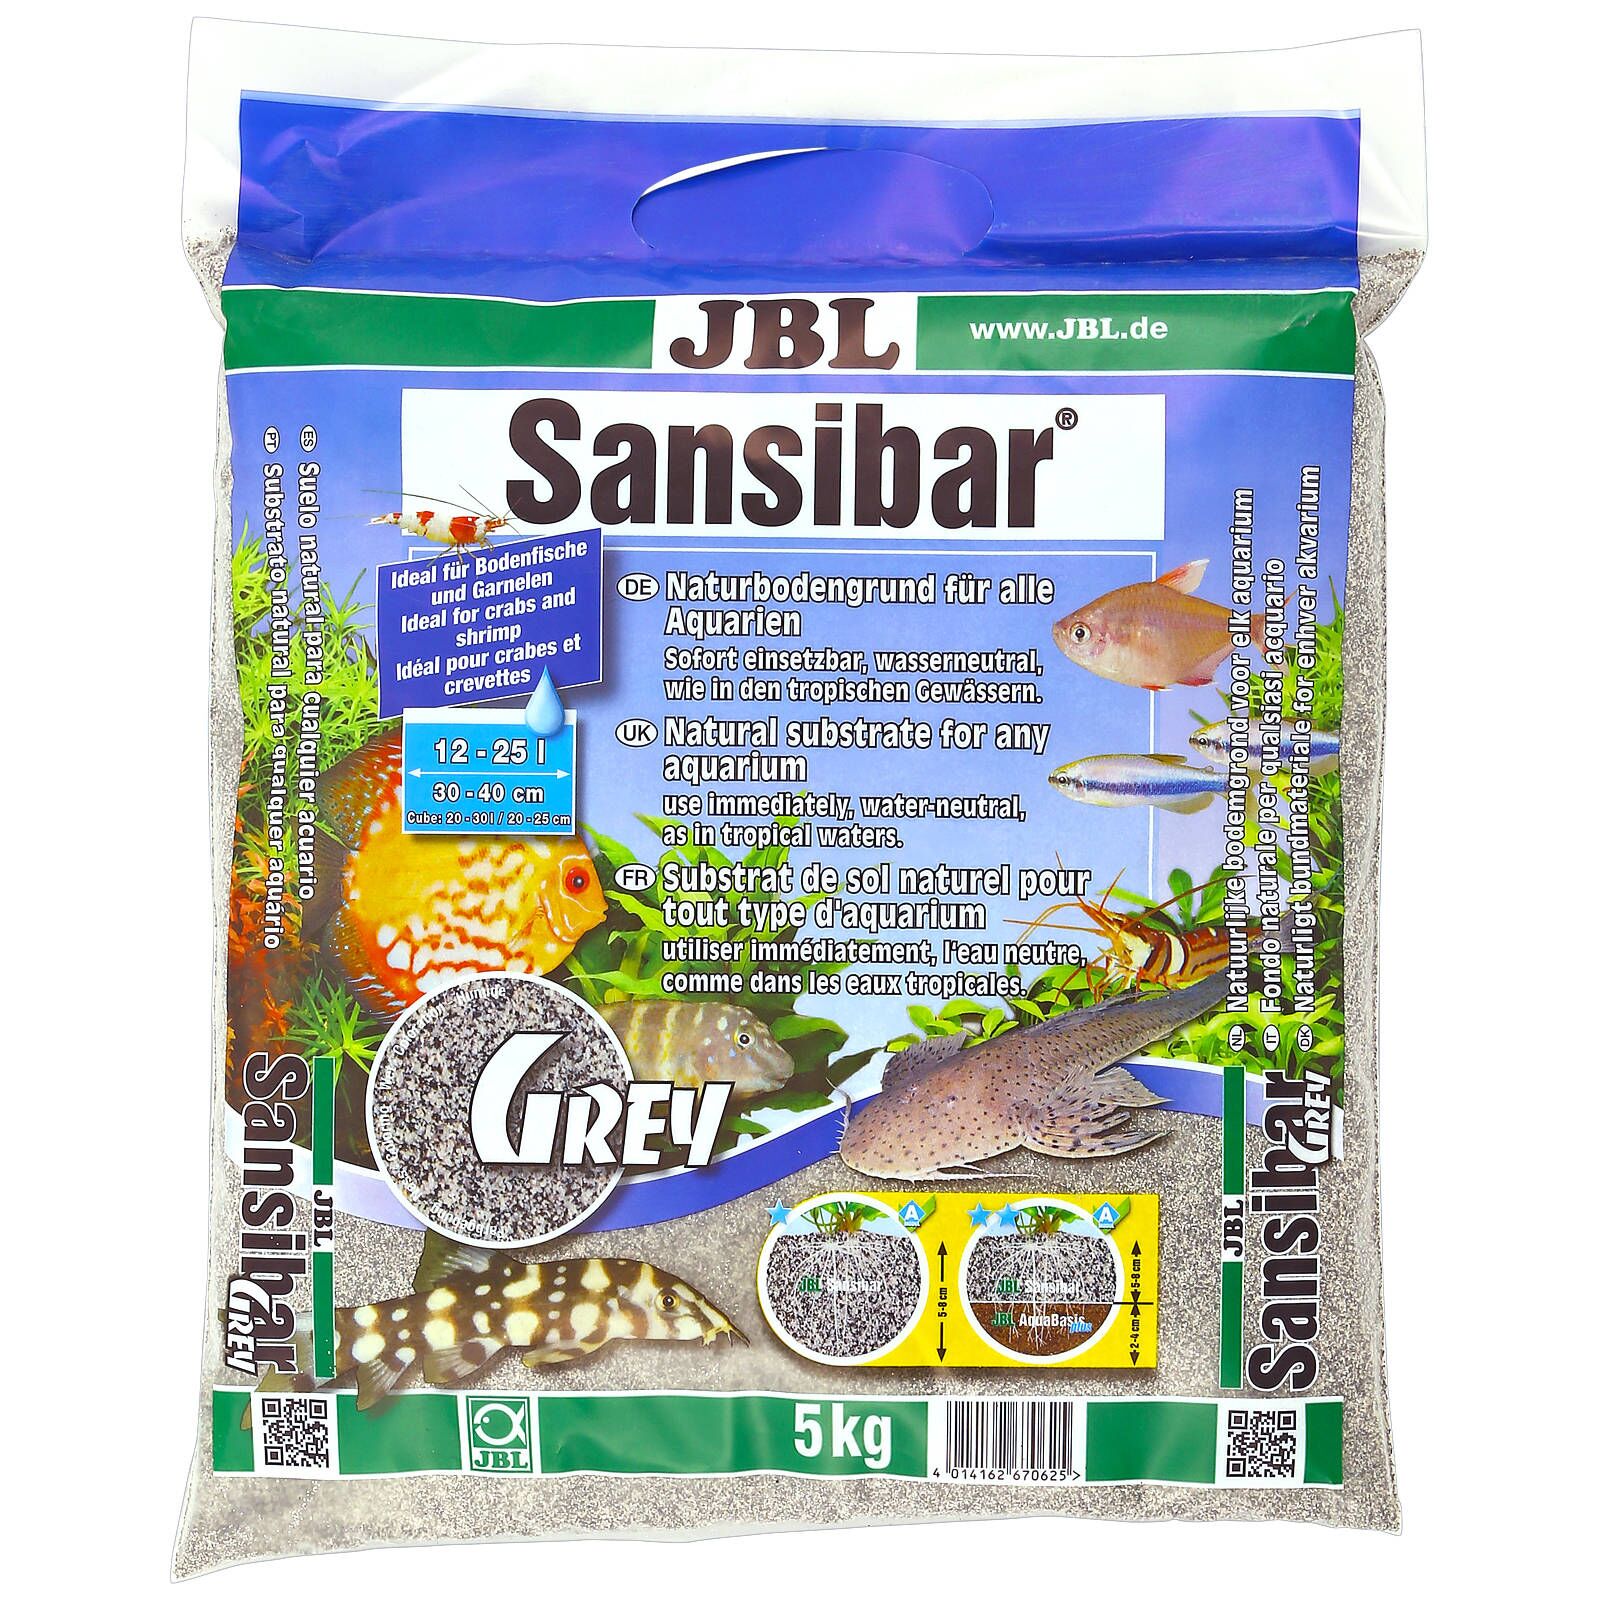 JBL - Sansibar - Grey - B-stock